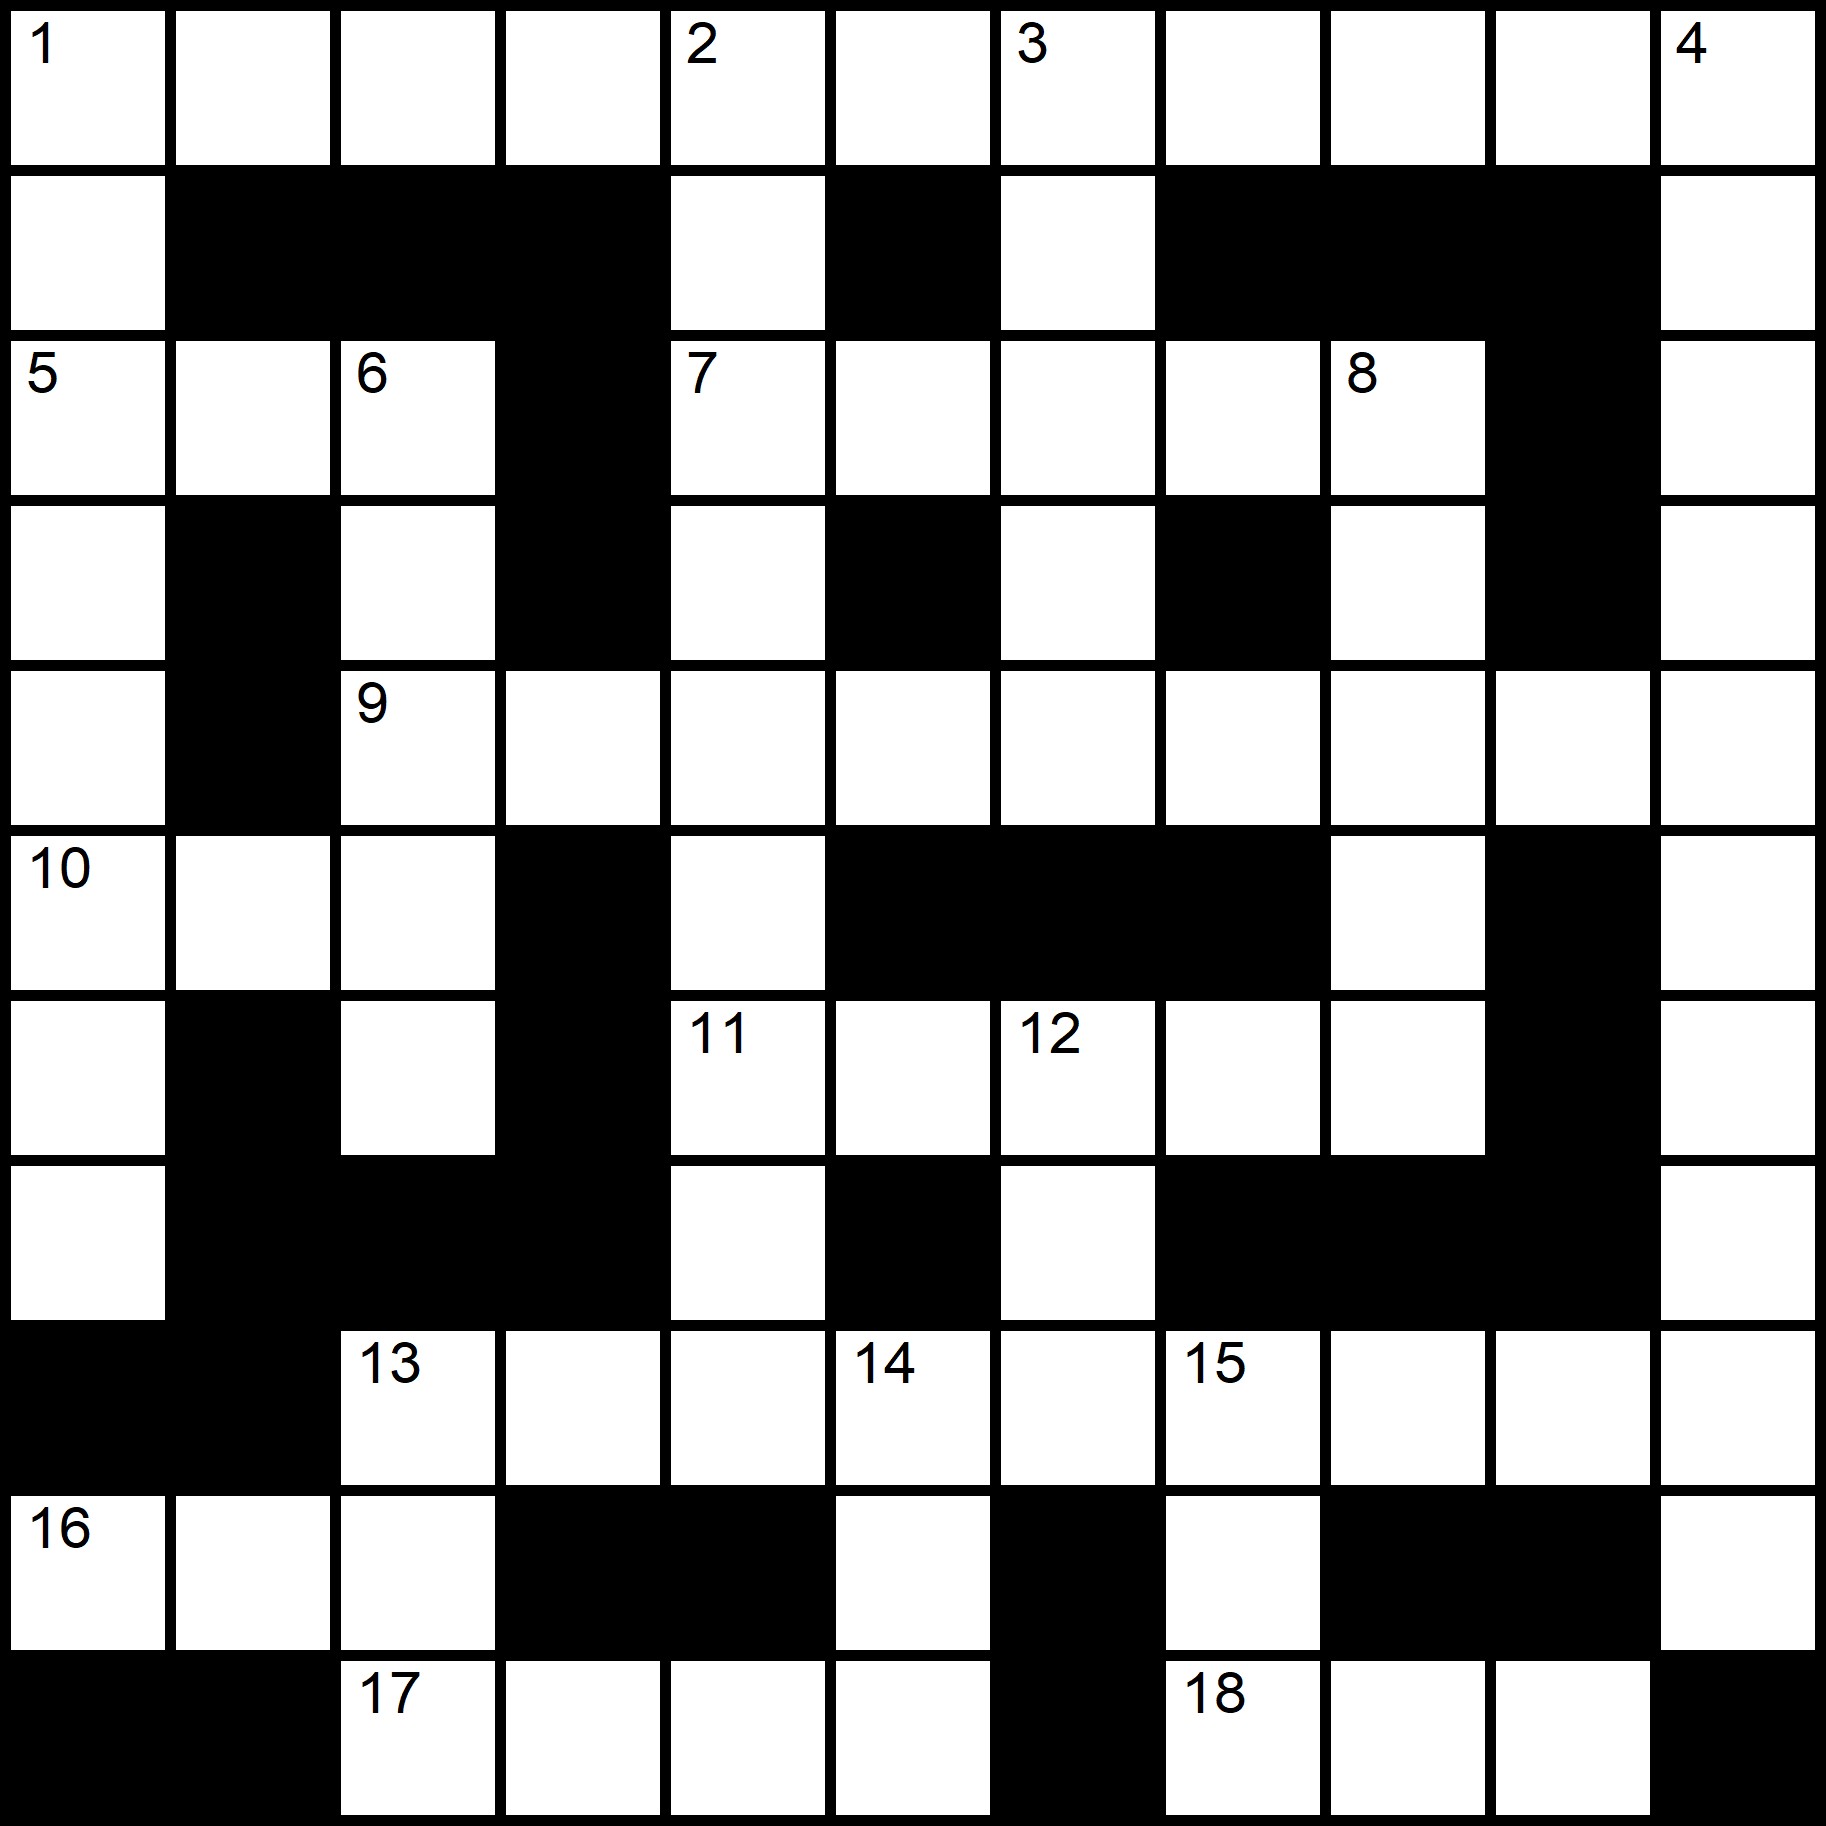 Printable Crossword Puzzles Free With Answer Key -
Placidus Flora - Crossword number twenty-nine